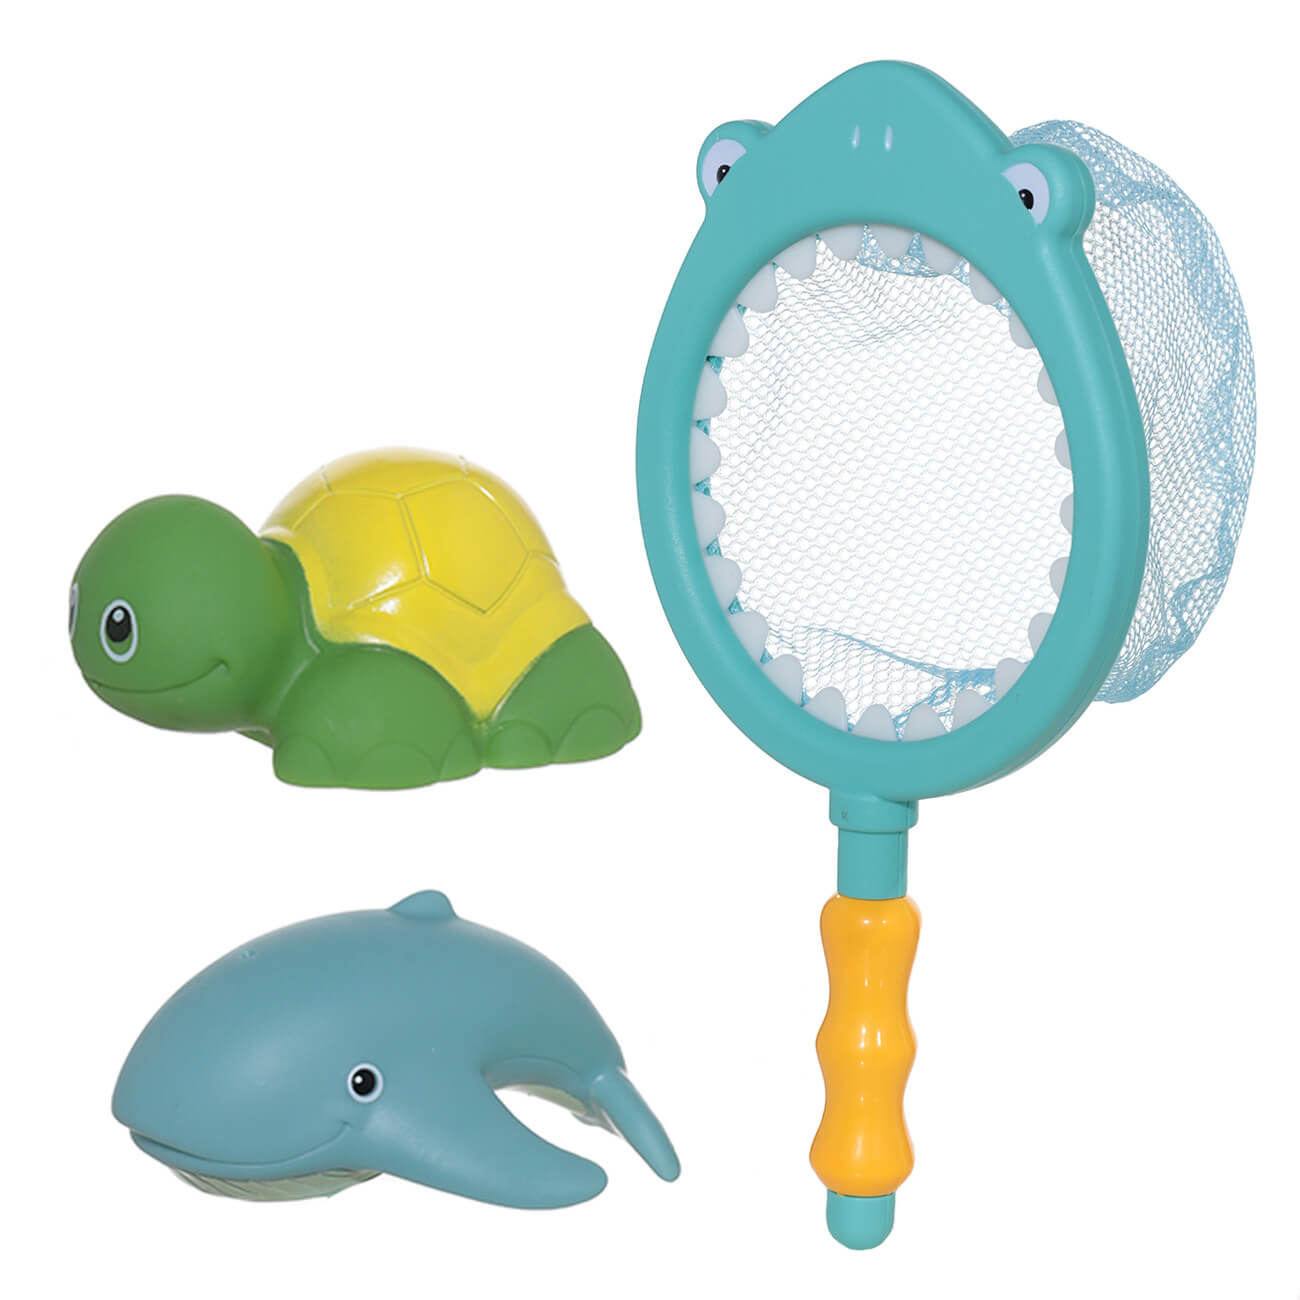 Набор игрушек для купания, 3 пр, сачок/игрушки, резина/пластик, Акула, Aquatic animals tetra сачок 4 15см